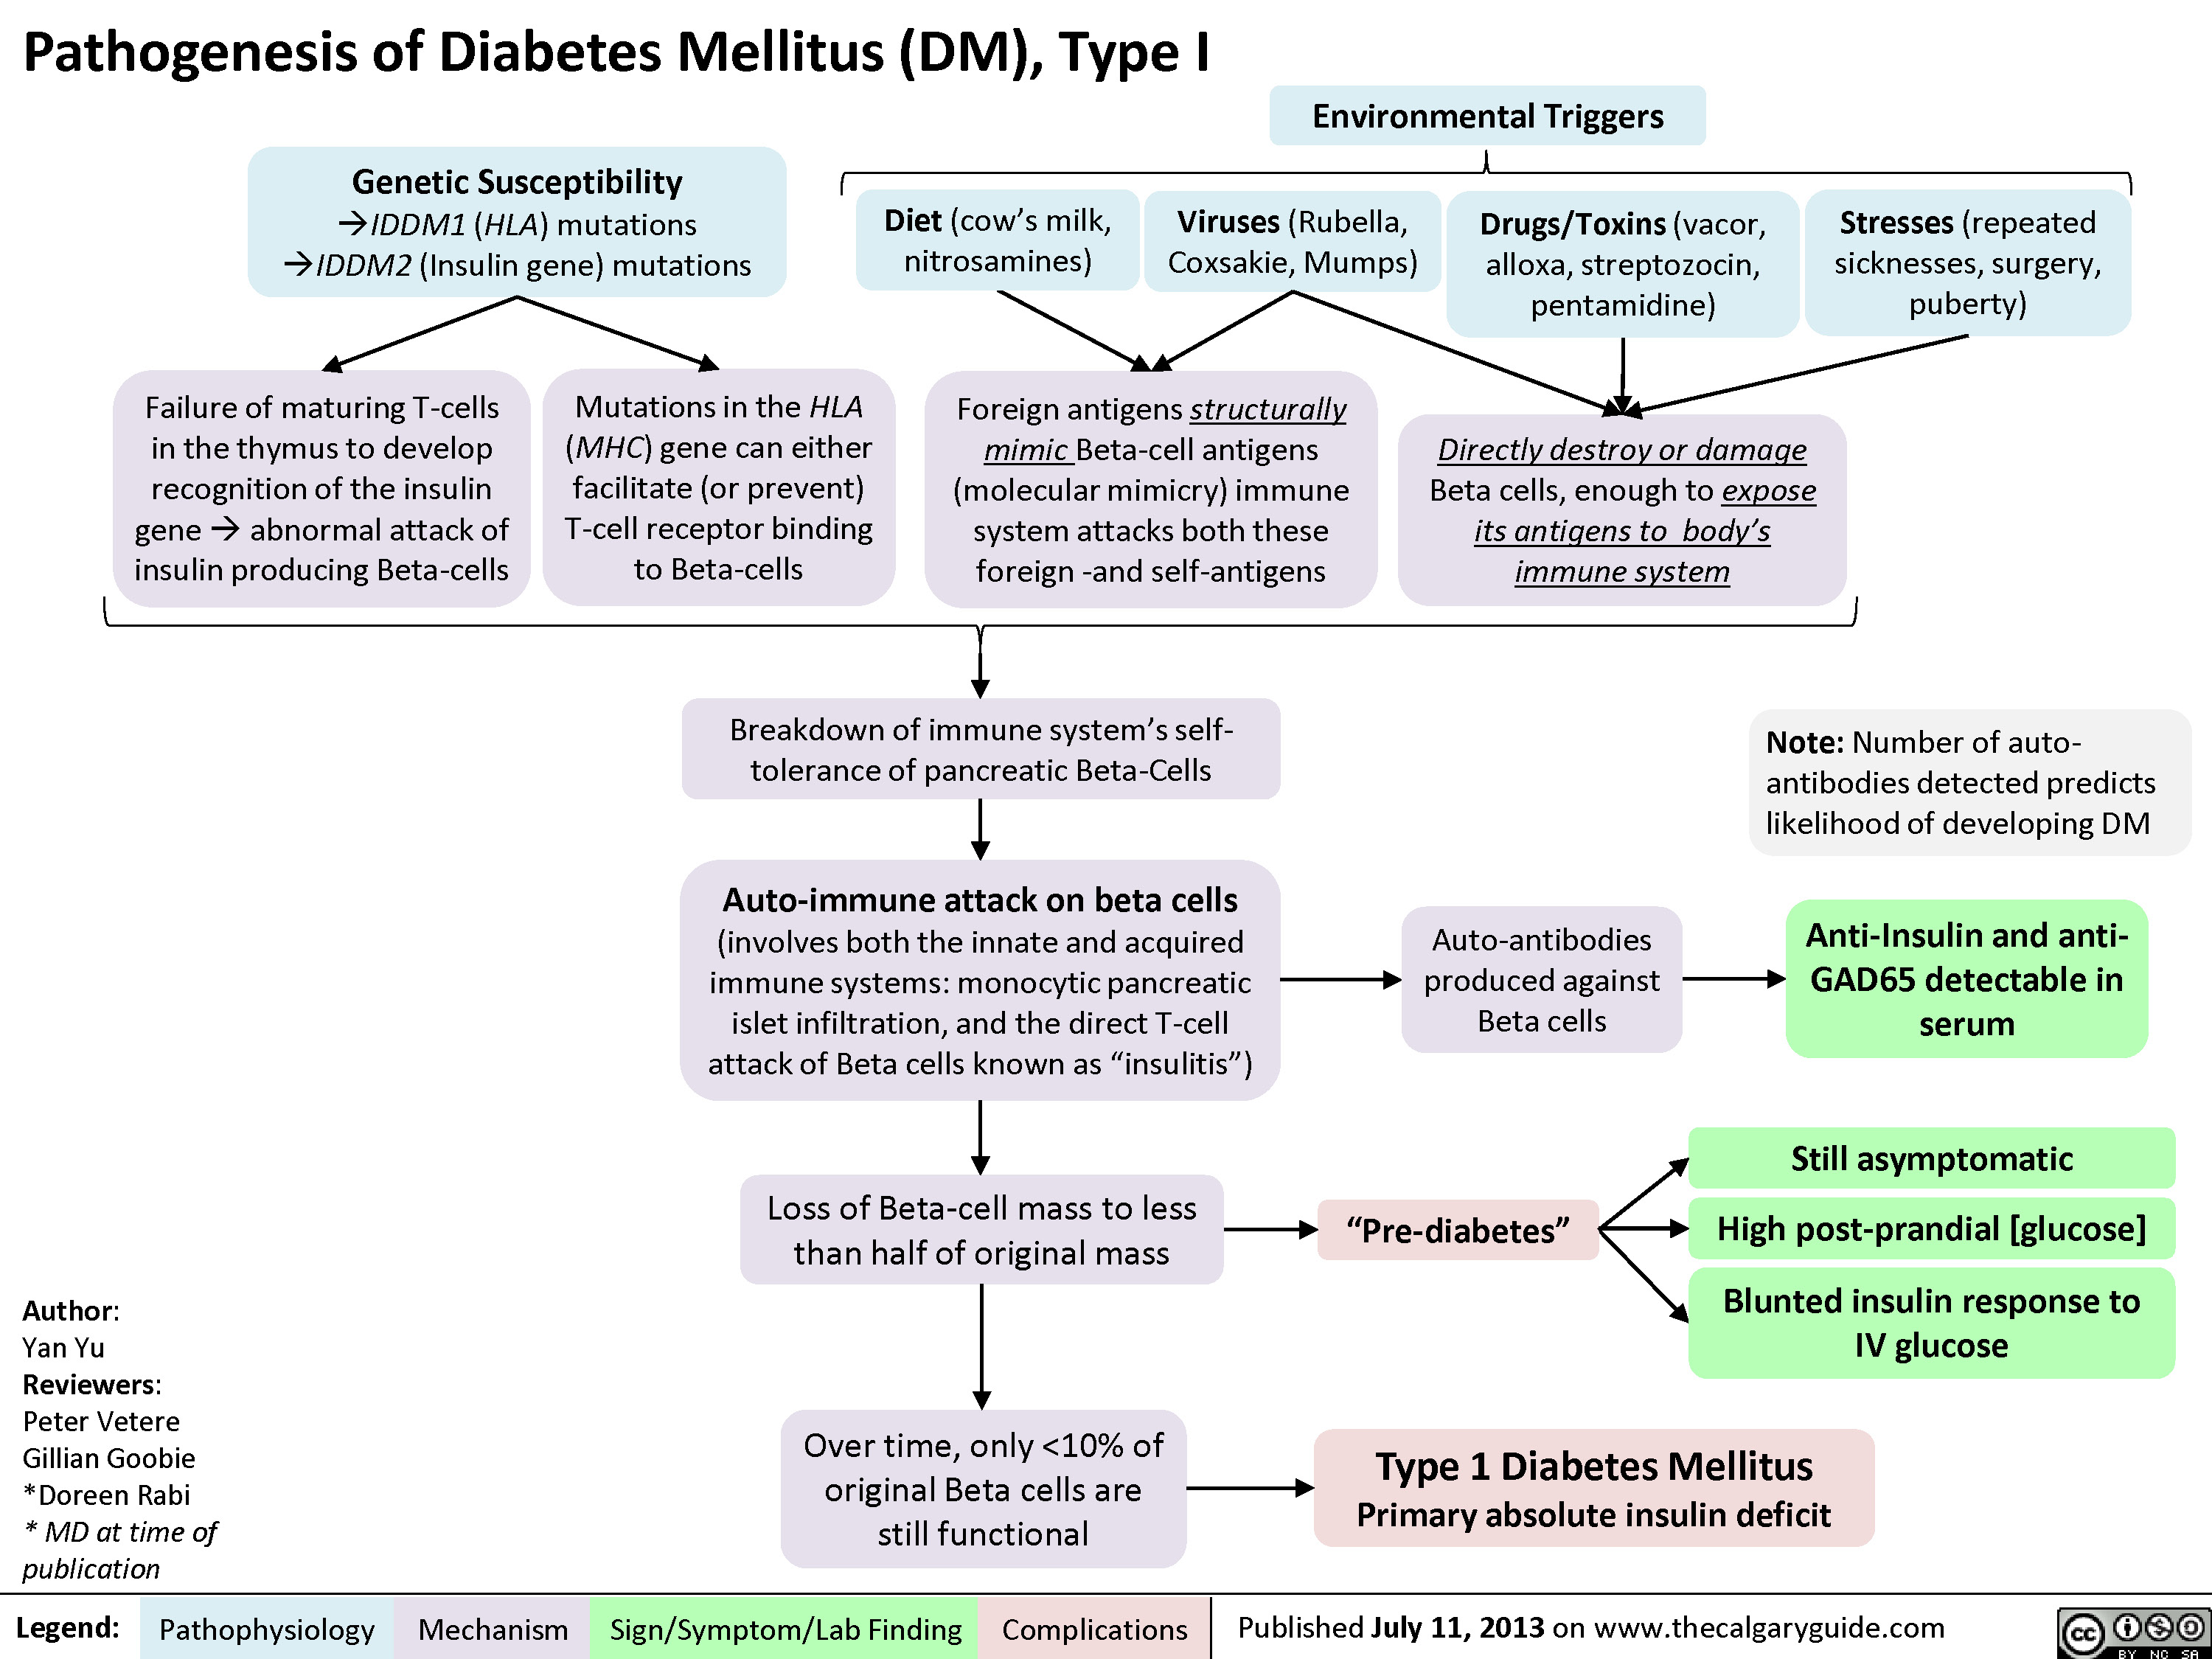 Patofisiologi diabetes melitus